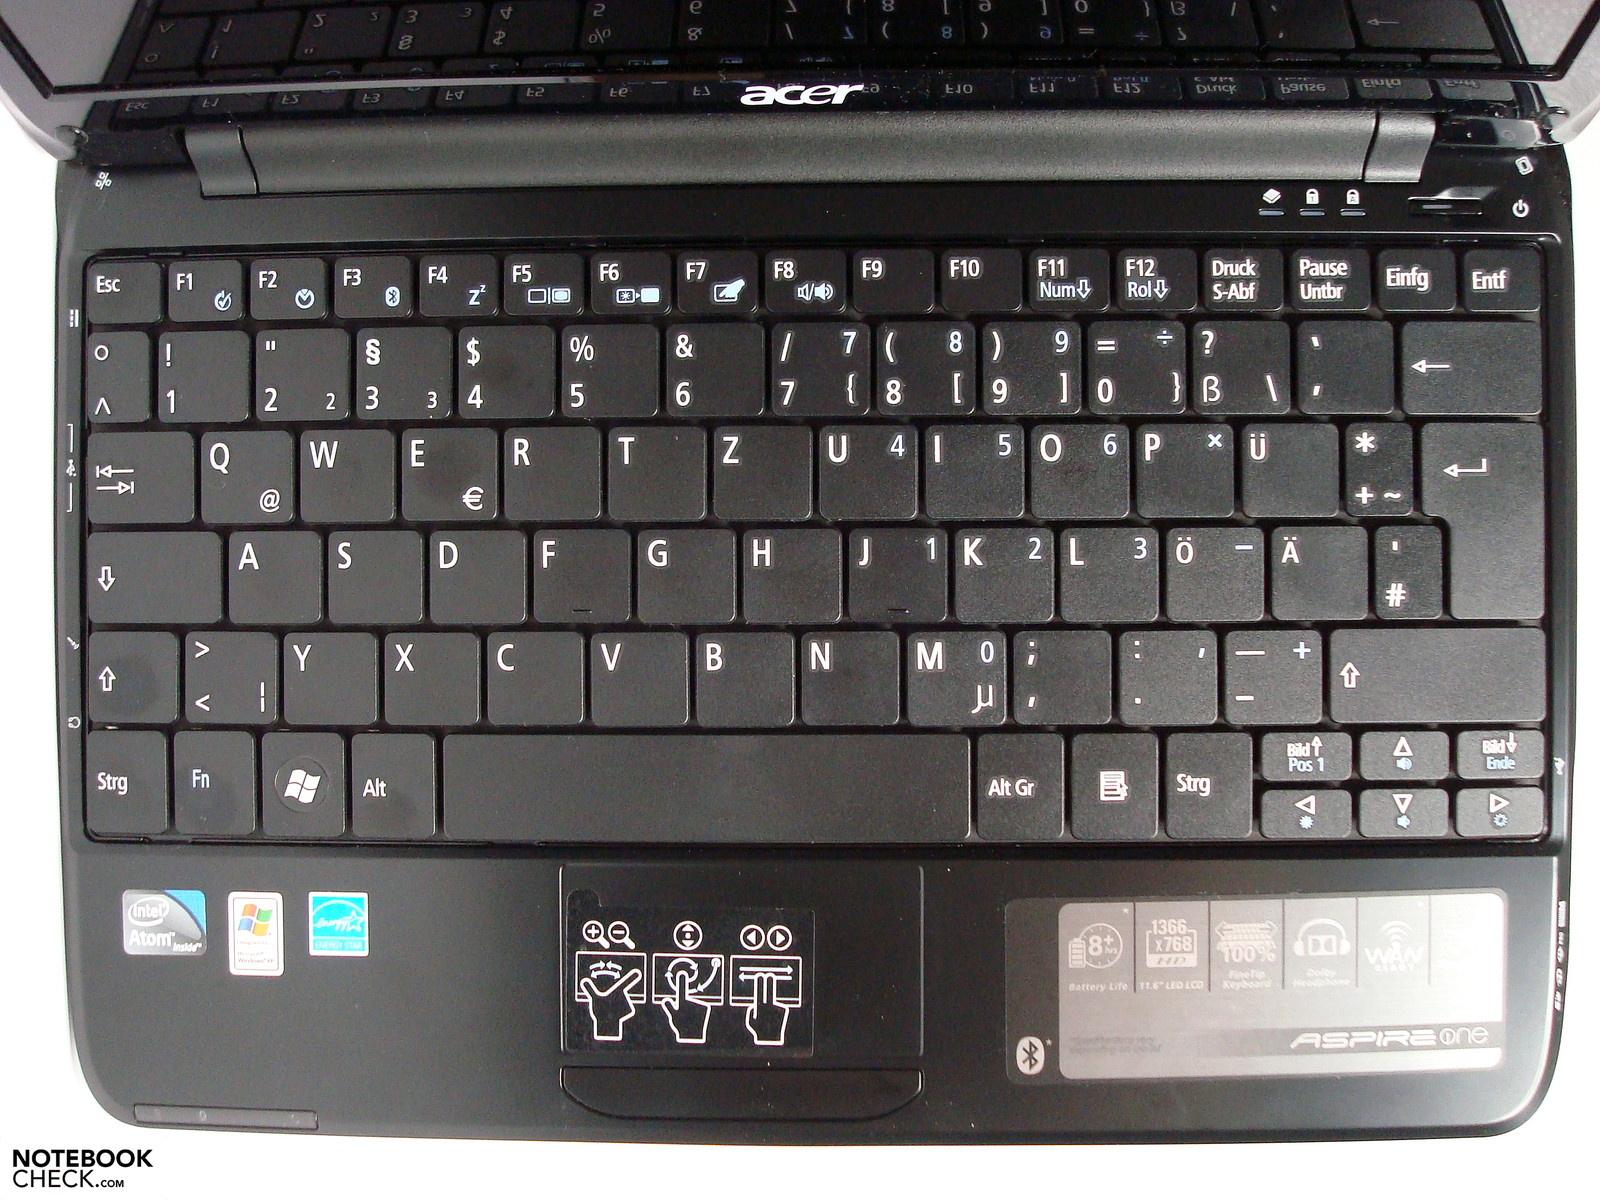 Подсветка клавиатуры ноутбука асер. Acer Mini Notebook. Мини клавиатура Асер. Acer 5737 клавиатура ru. Асер тач за клавиатурой.